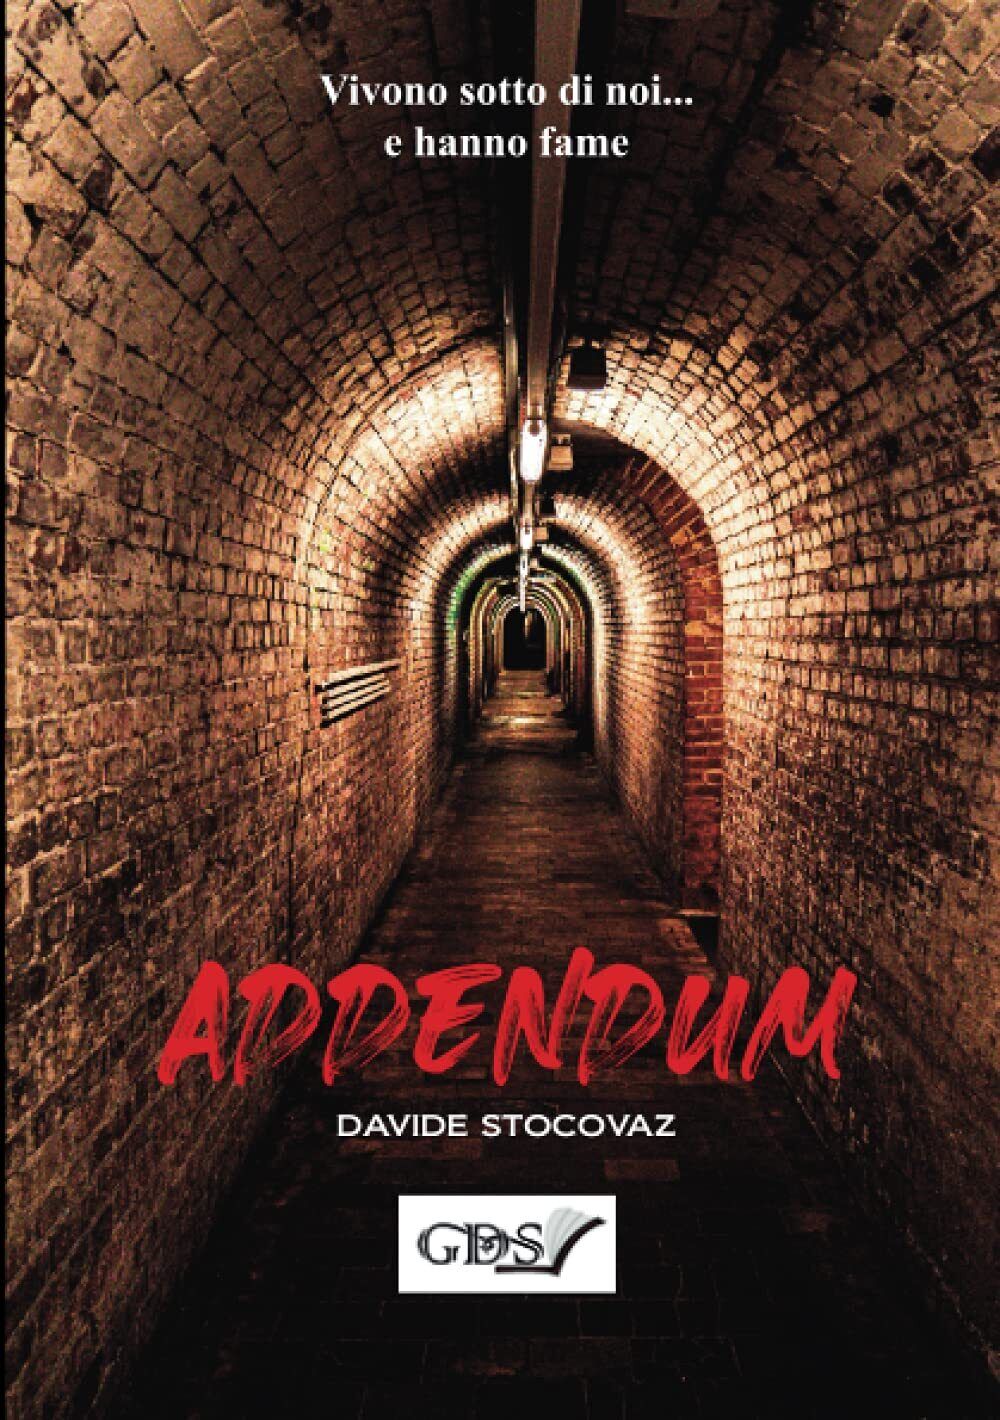 Addendum - Davide Stocovaz - GDS, 2021